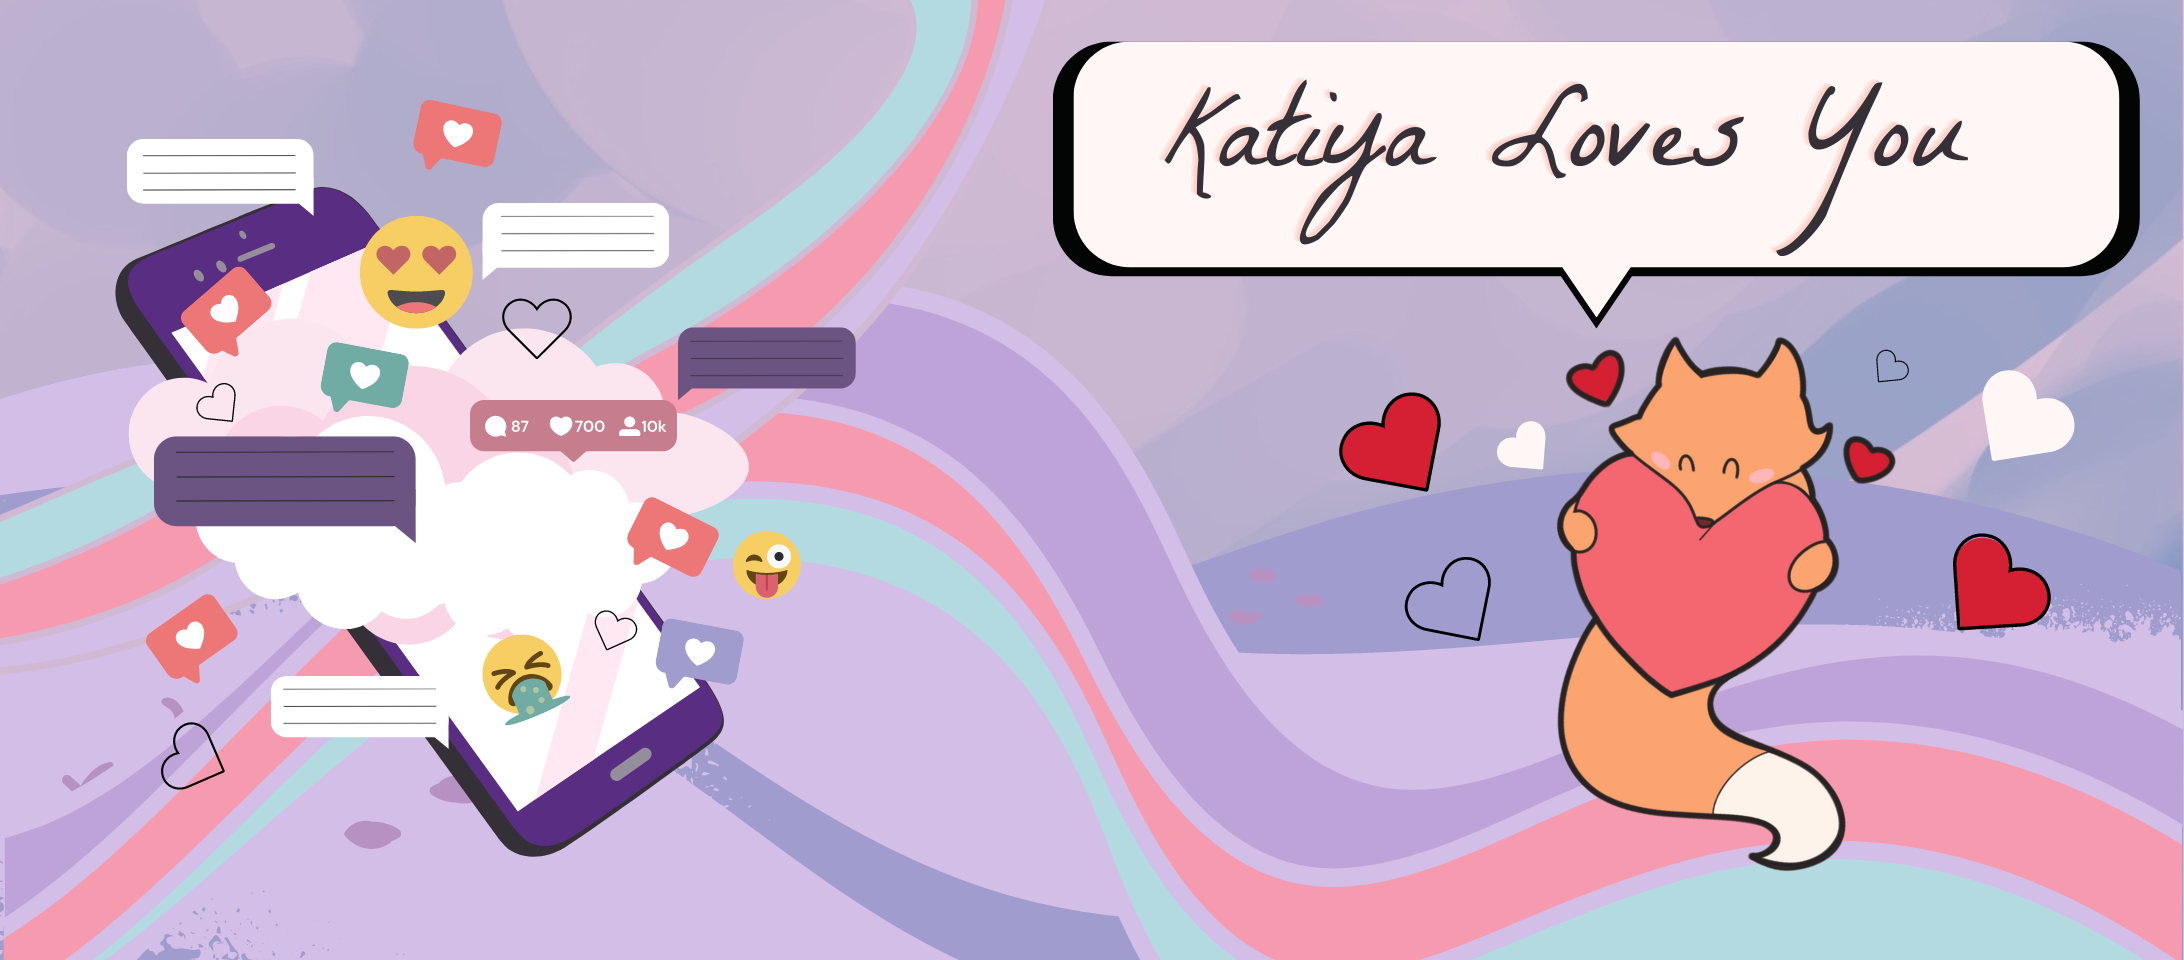 Katiya Loves You!